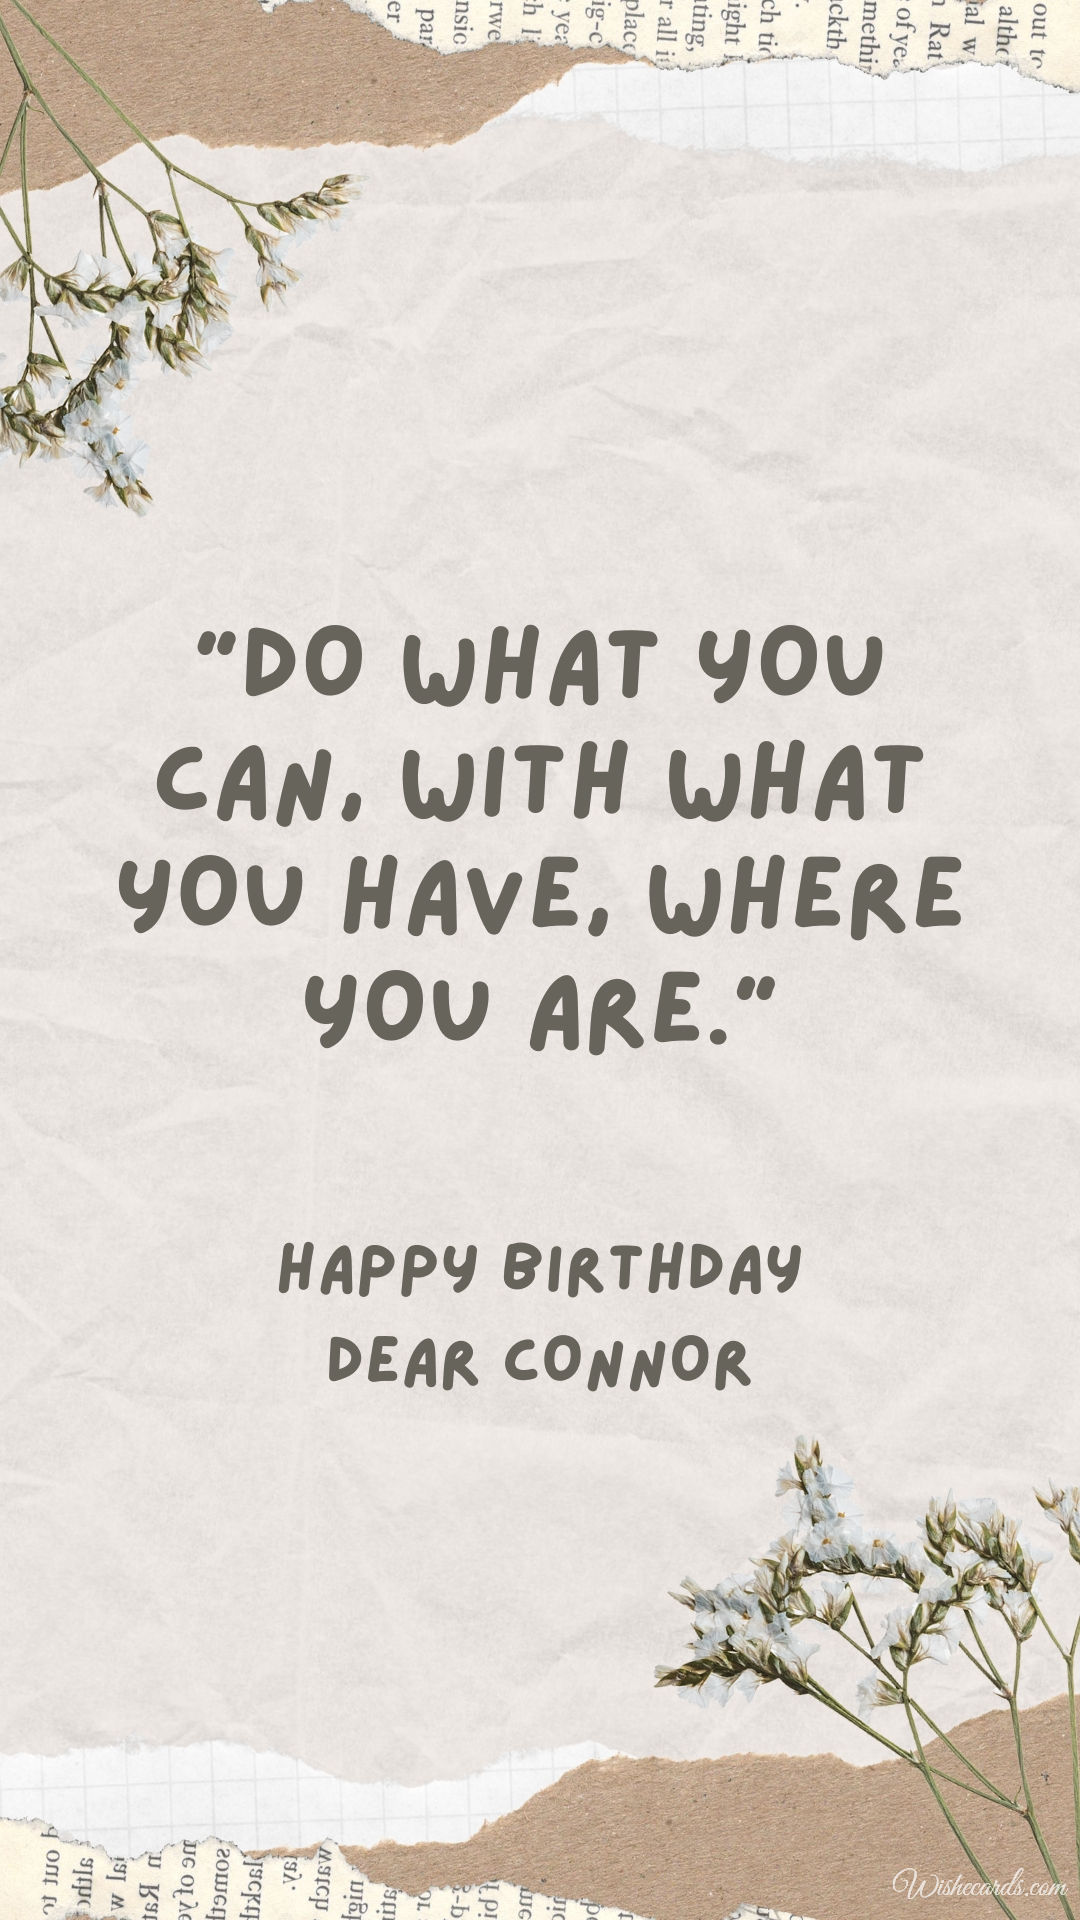 Happy Birthday to Connor